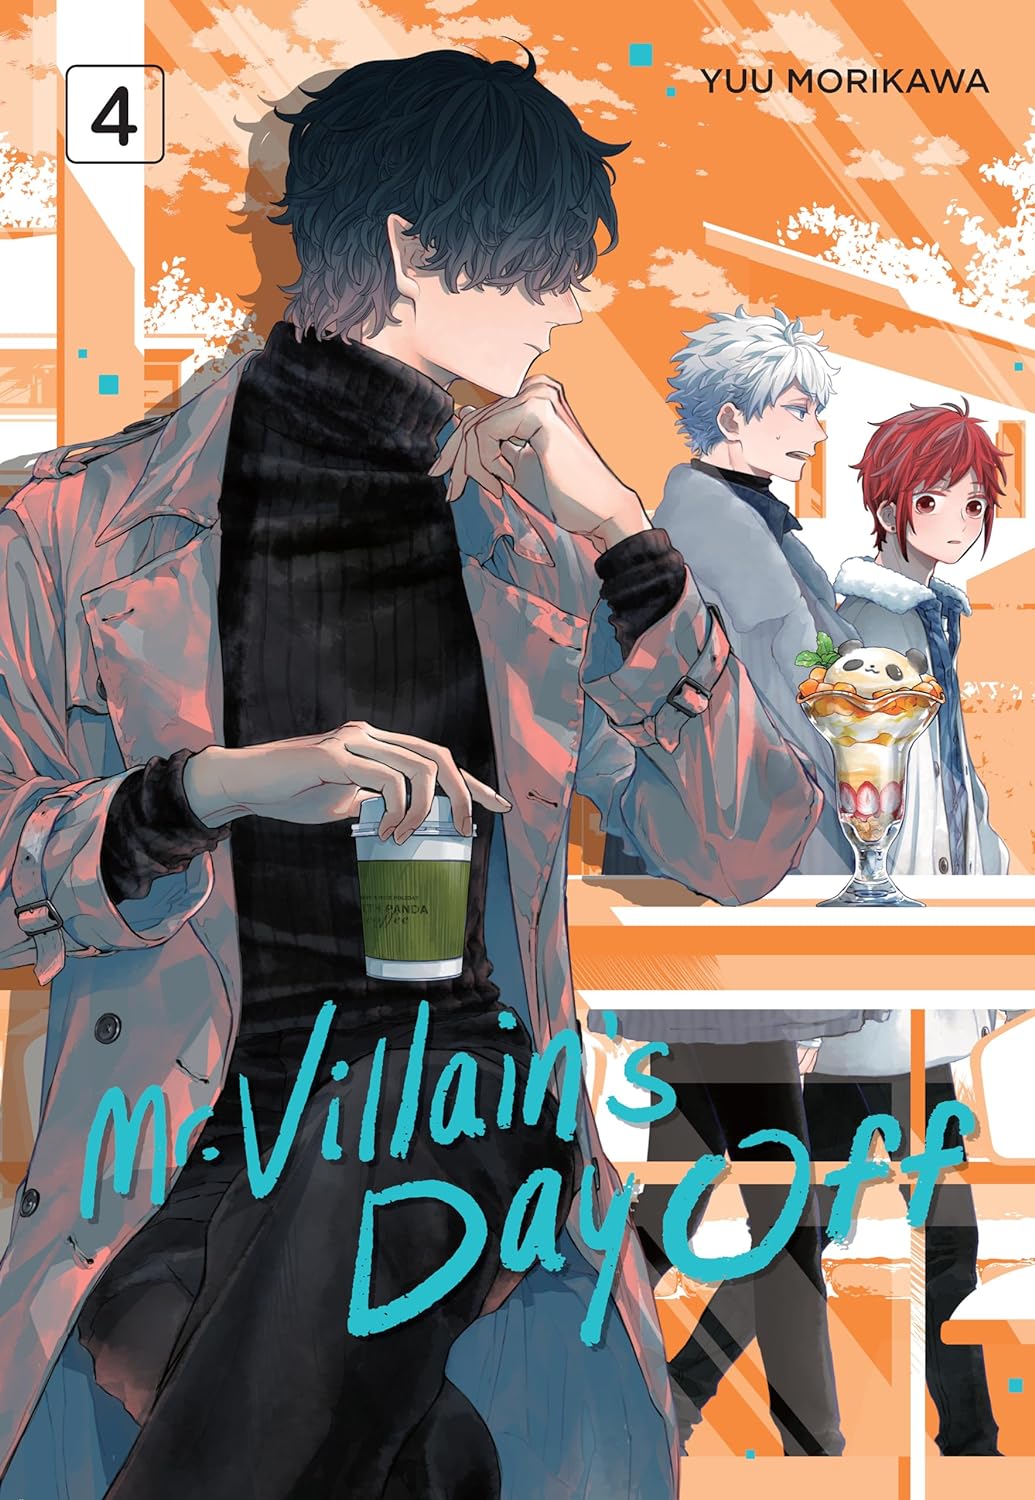 (14/05/2024) Mr. Villain's Day Off Vol. 04